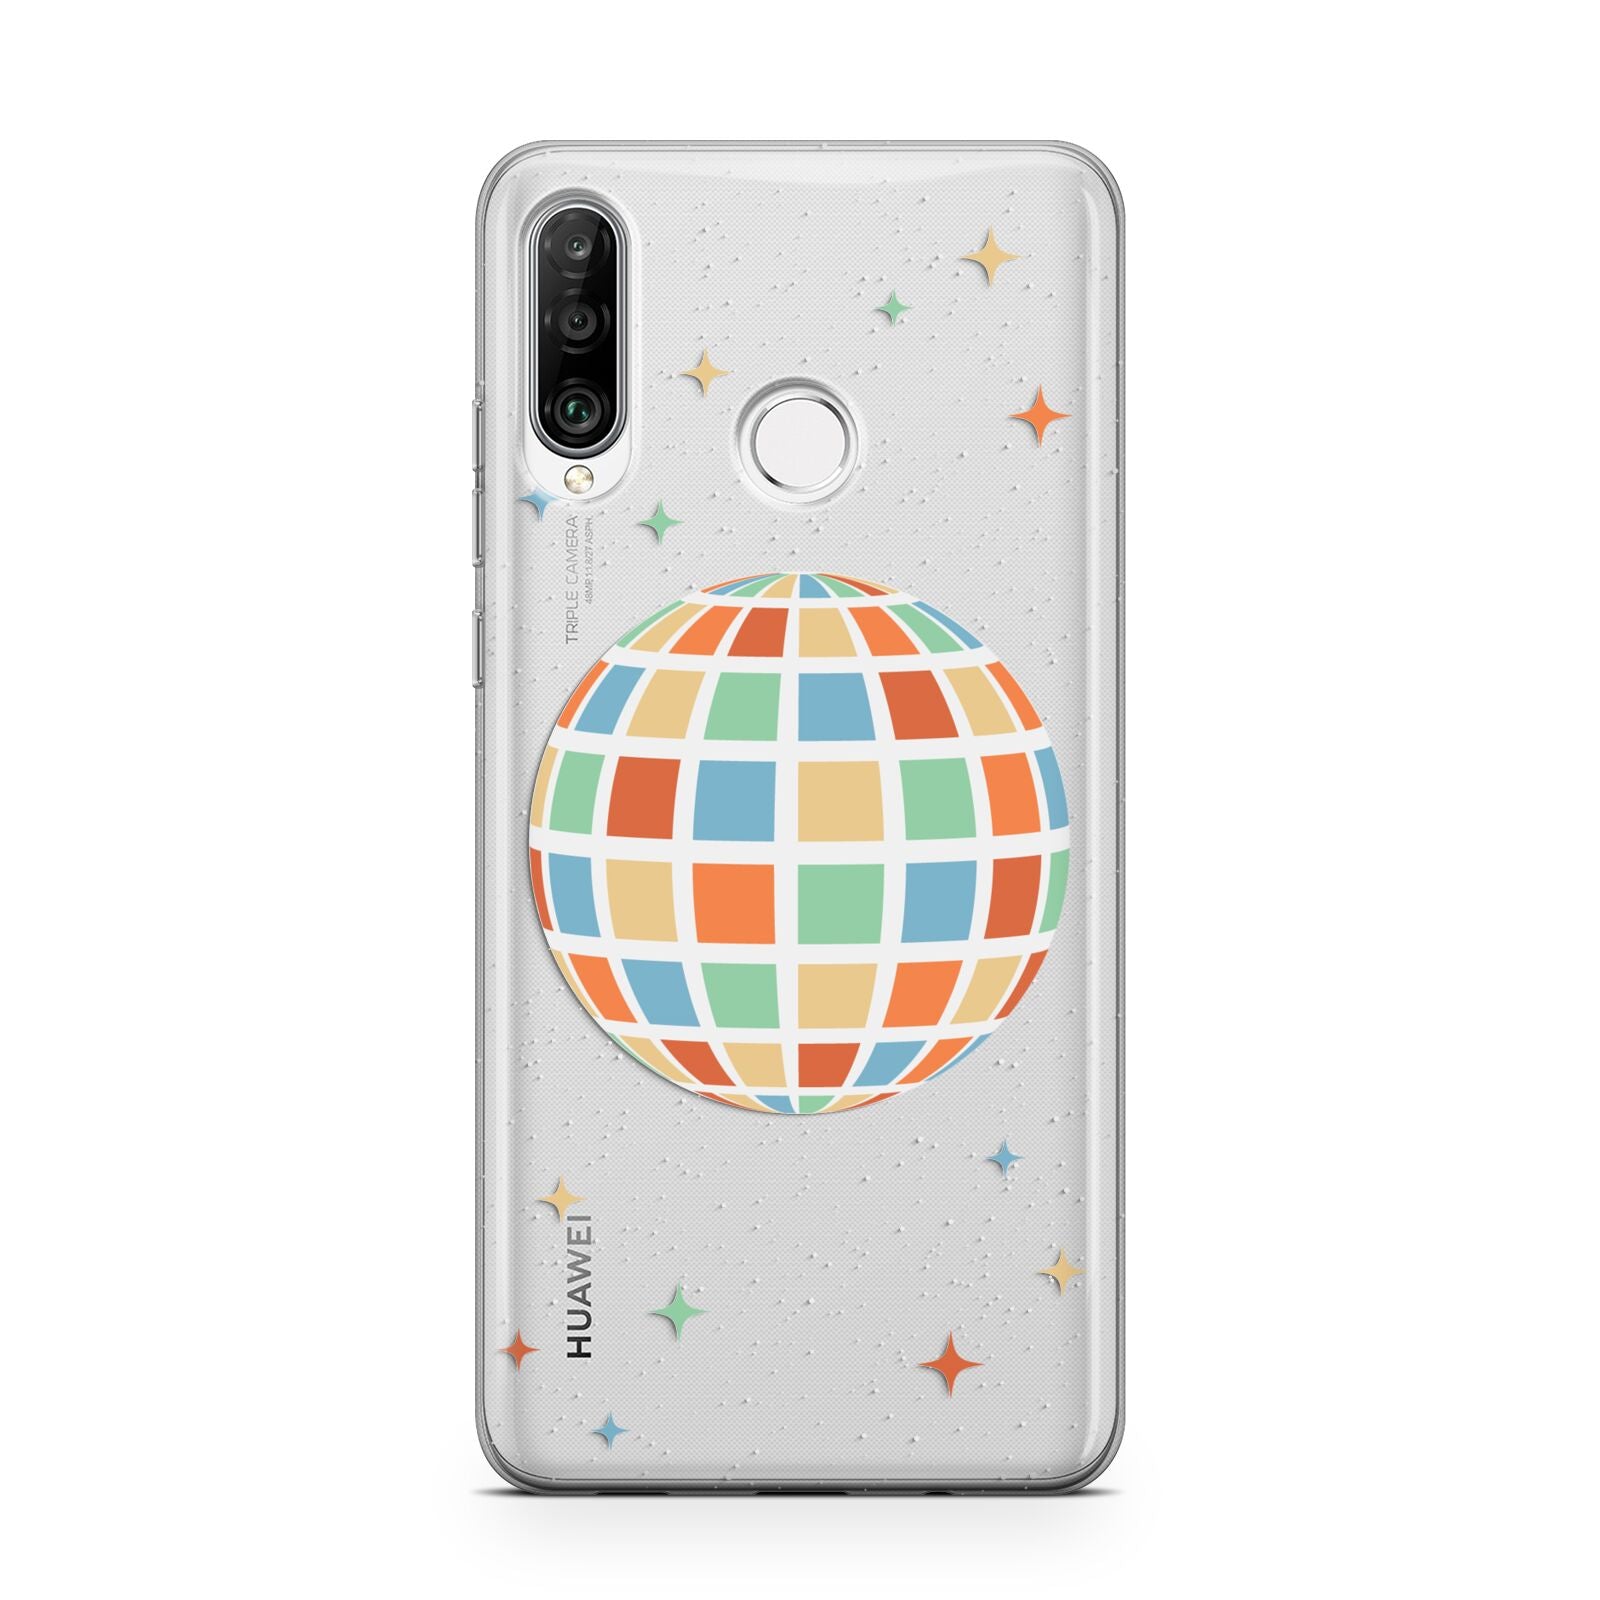 Disco Ball Huawei P30 Lite Phone Case